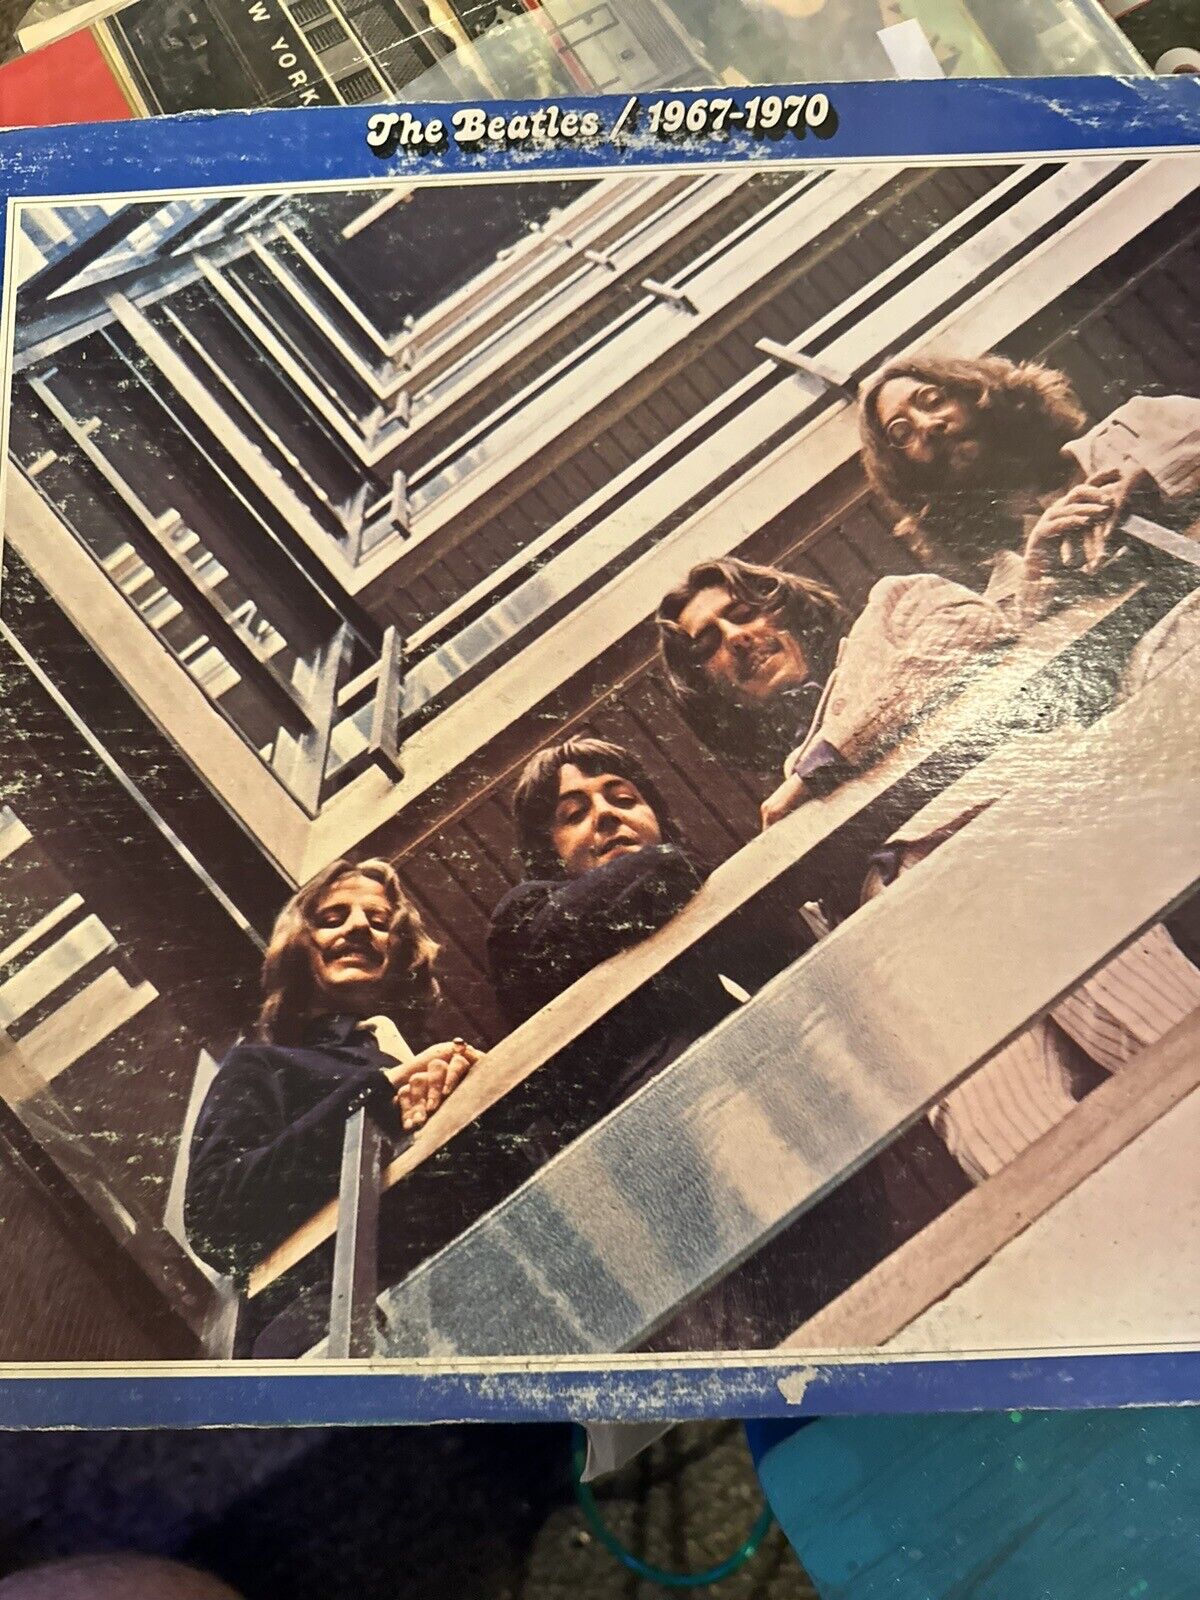 The Beatles - 1967-1970, 2xLP, Comp, Win Apple Records SKBO 3404 1973 US